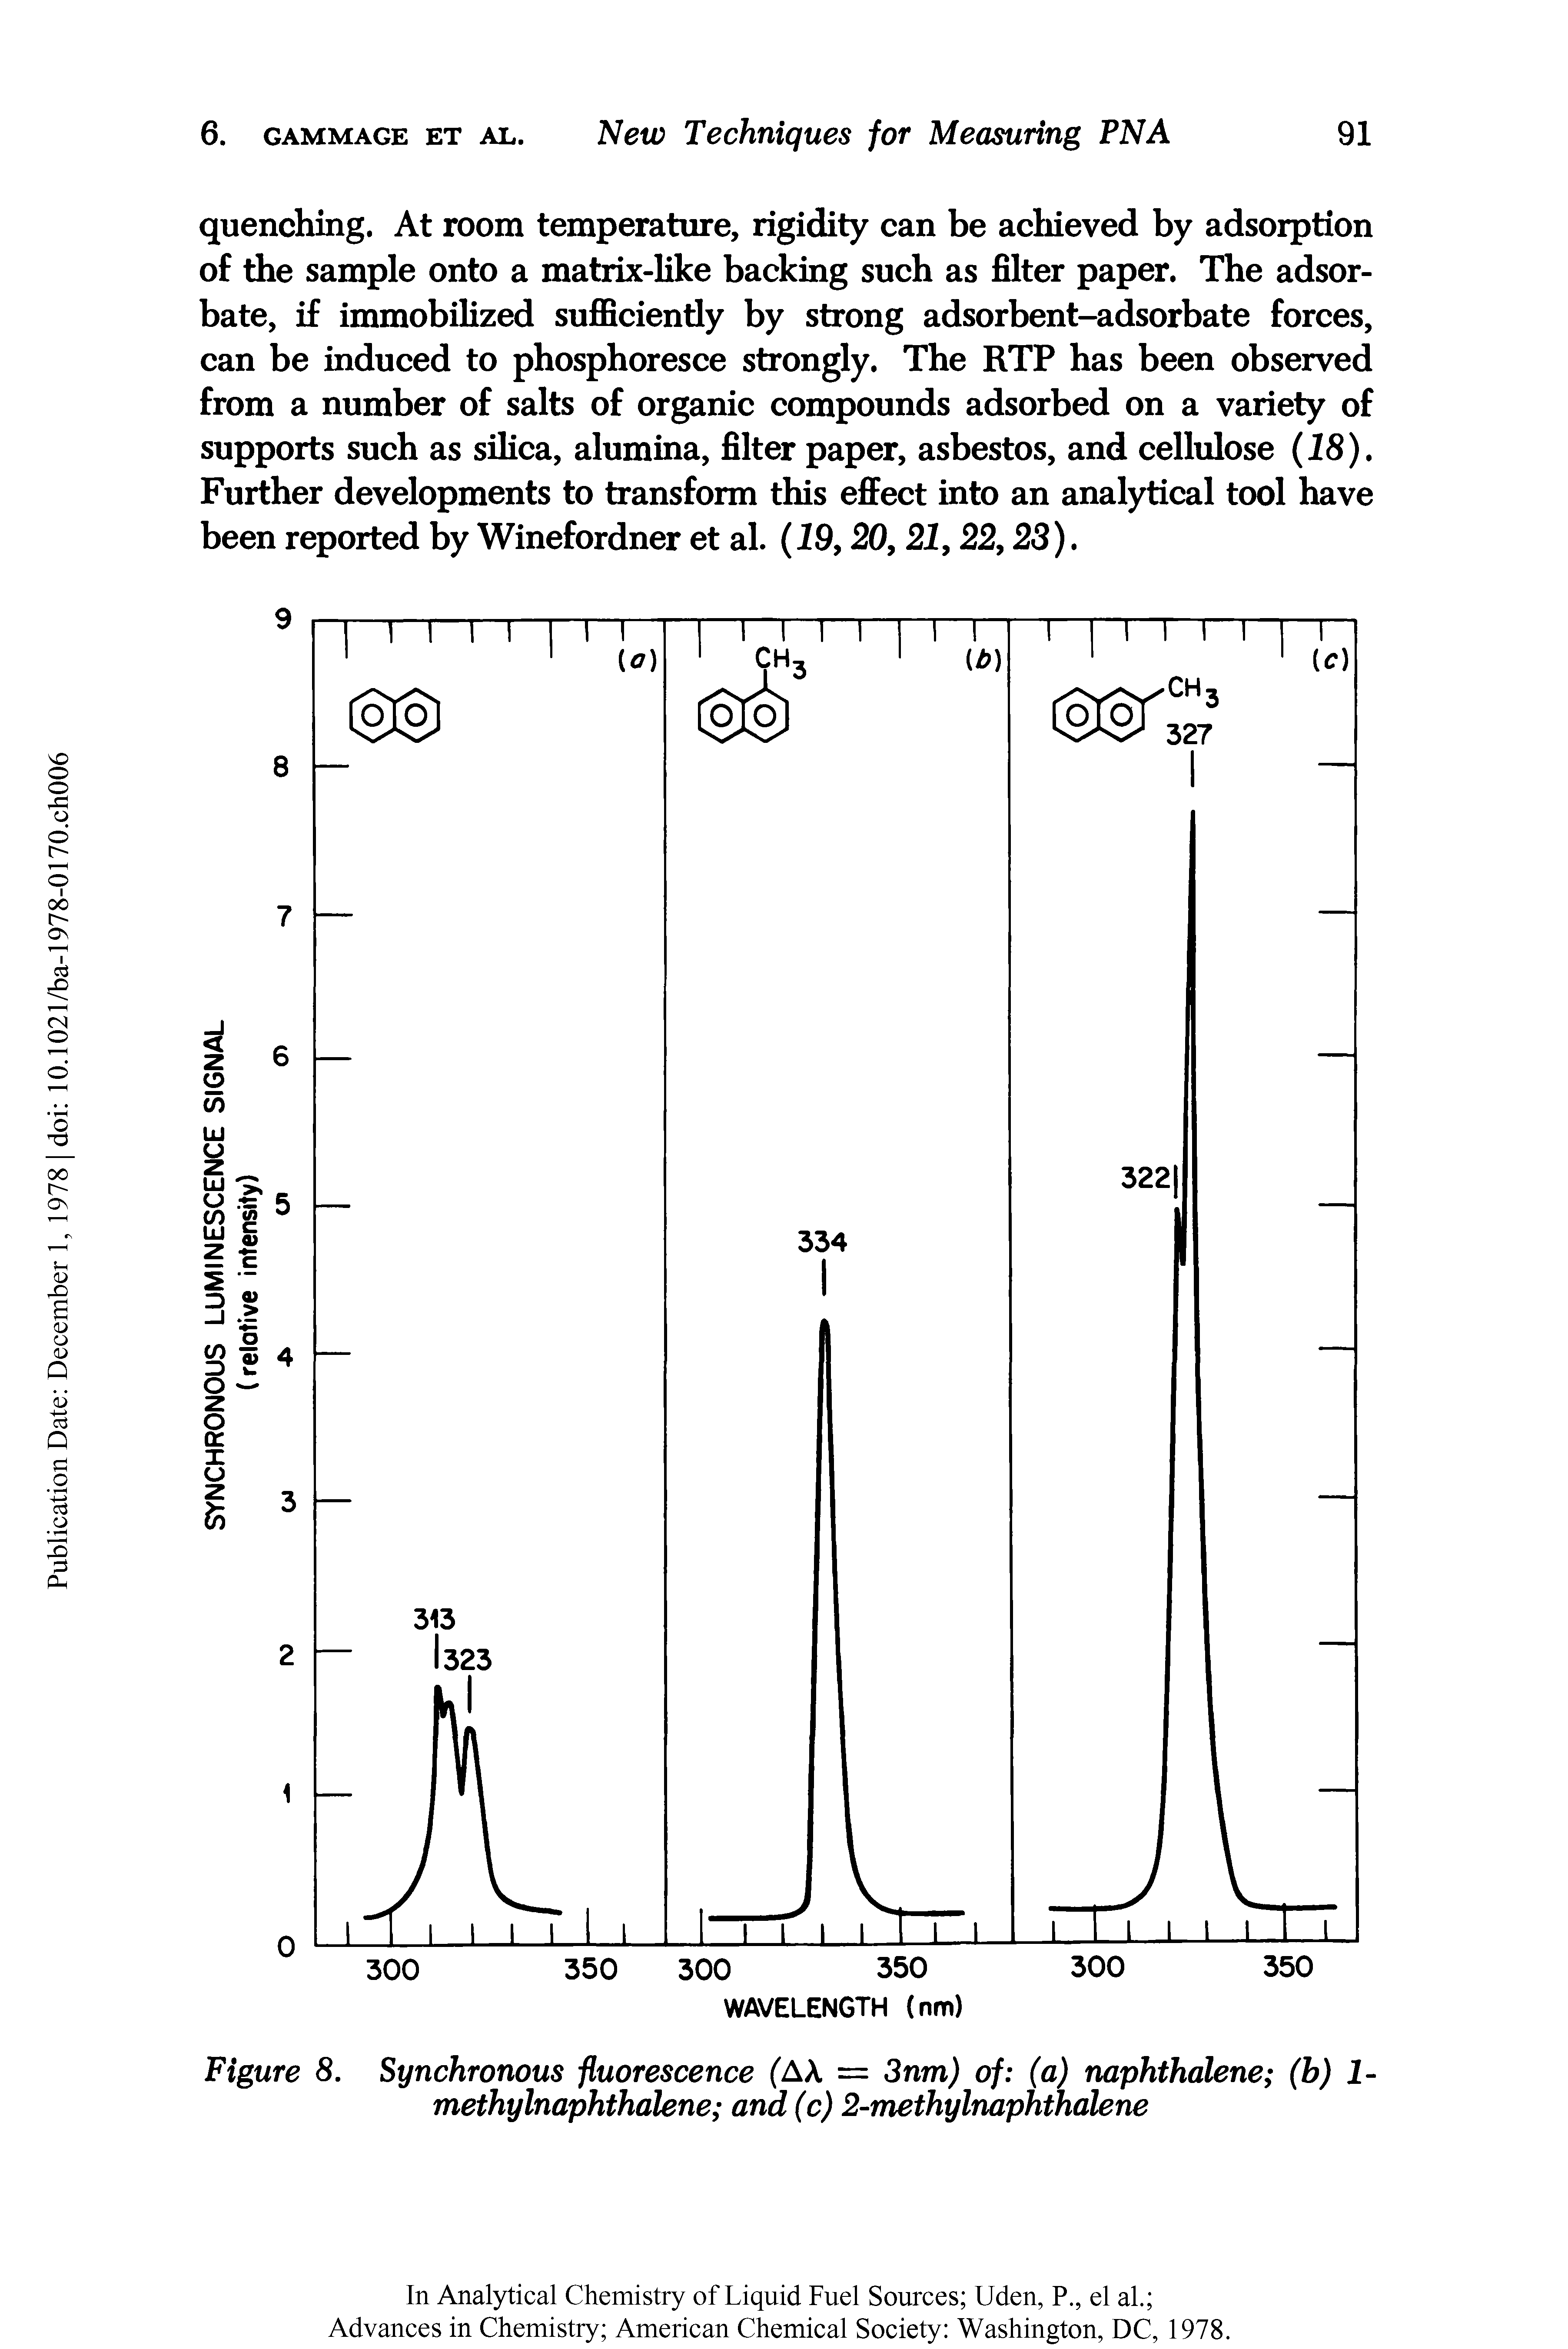 Figure 8. Synchronous fluorescence (AA = 3nm) of (a) naphthalene (b) I-methylnaphthalene and (c) 2-methylnaphthalene...